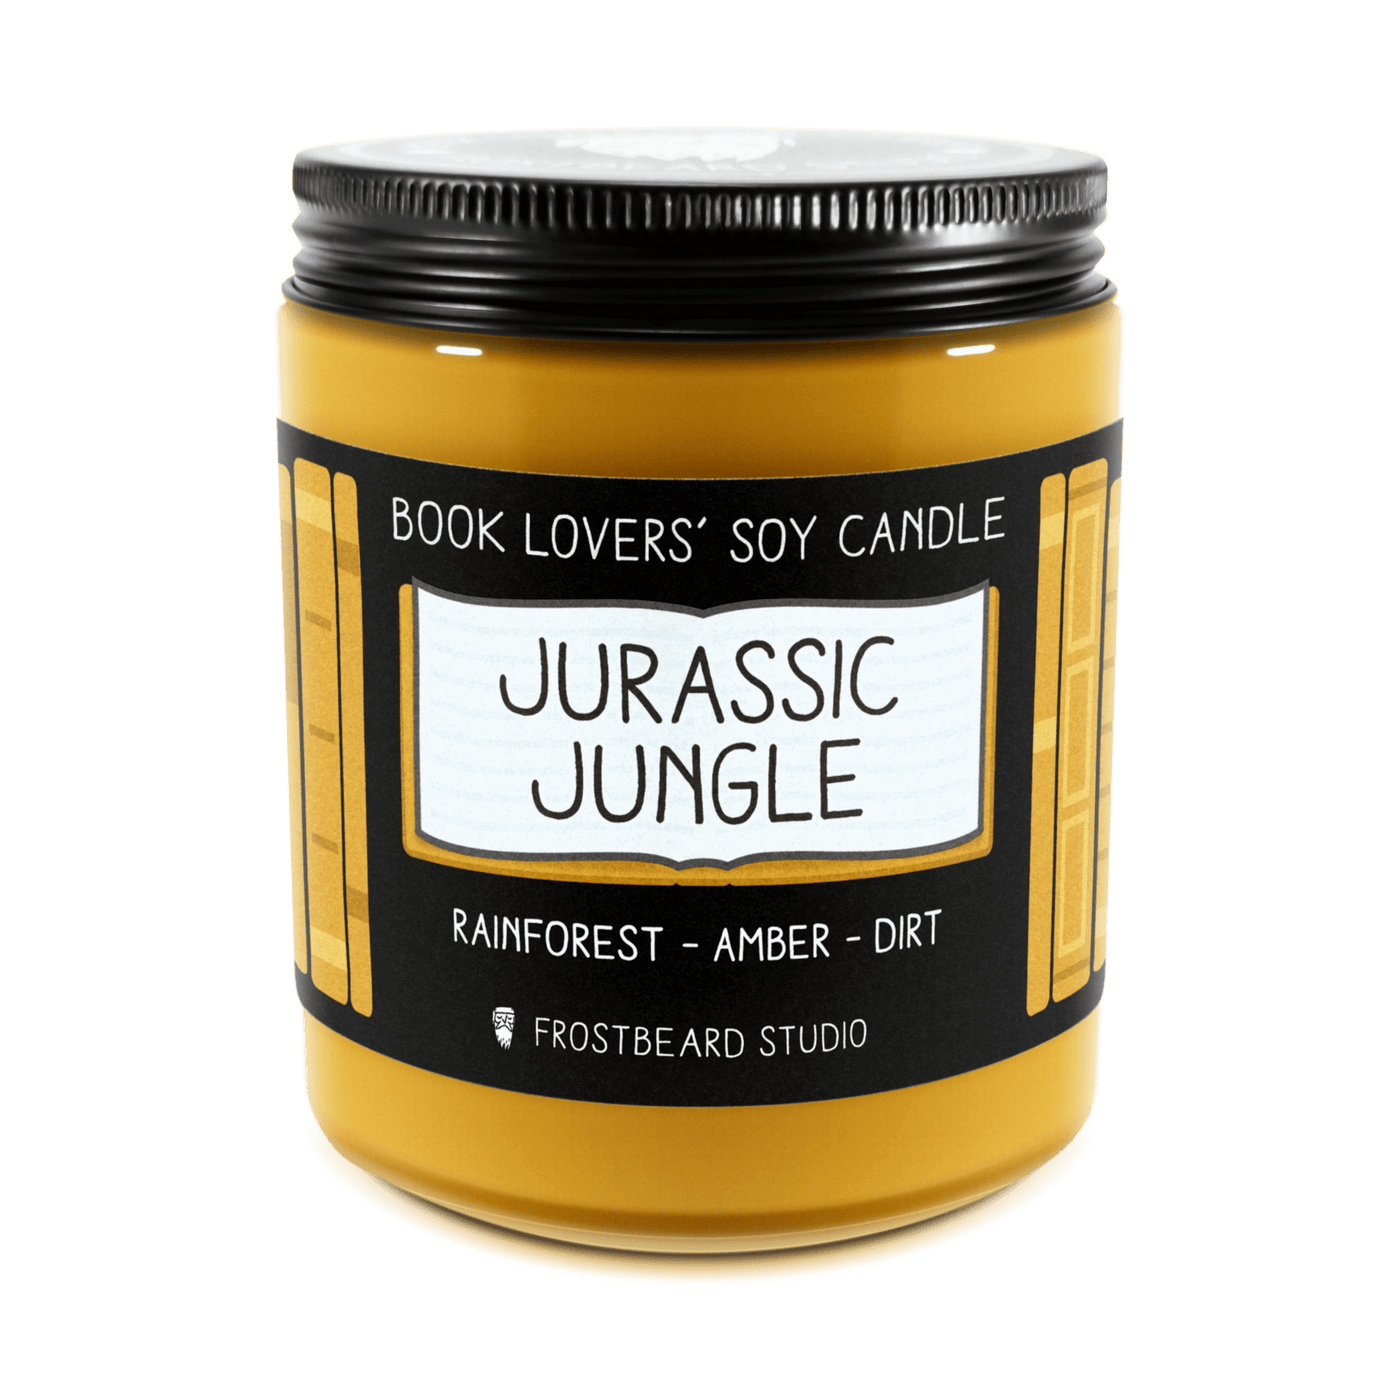 Jurassic Jungle  -  8 oz Jar  -  Book Lovers' Soy Candle  -  Frostbeard Studio